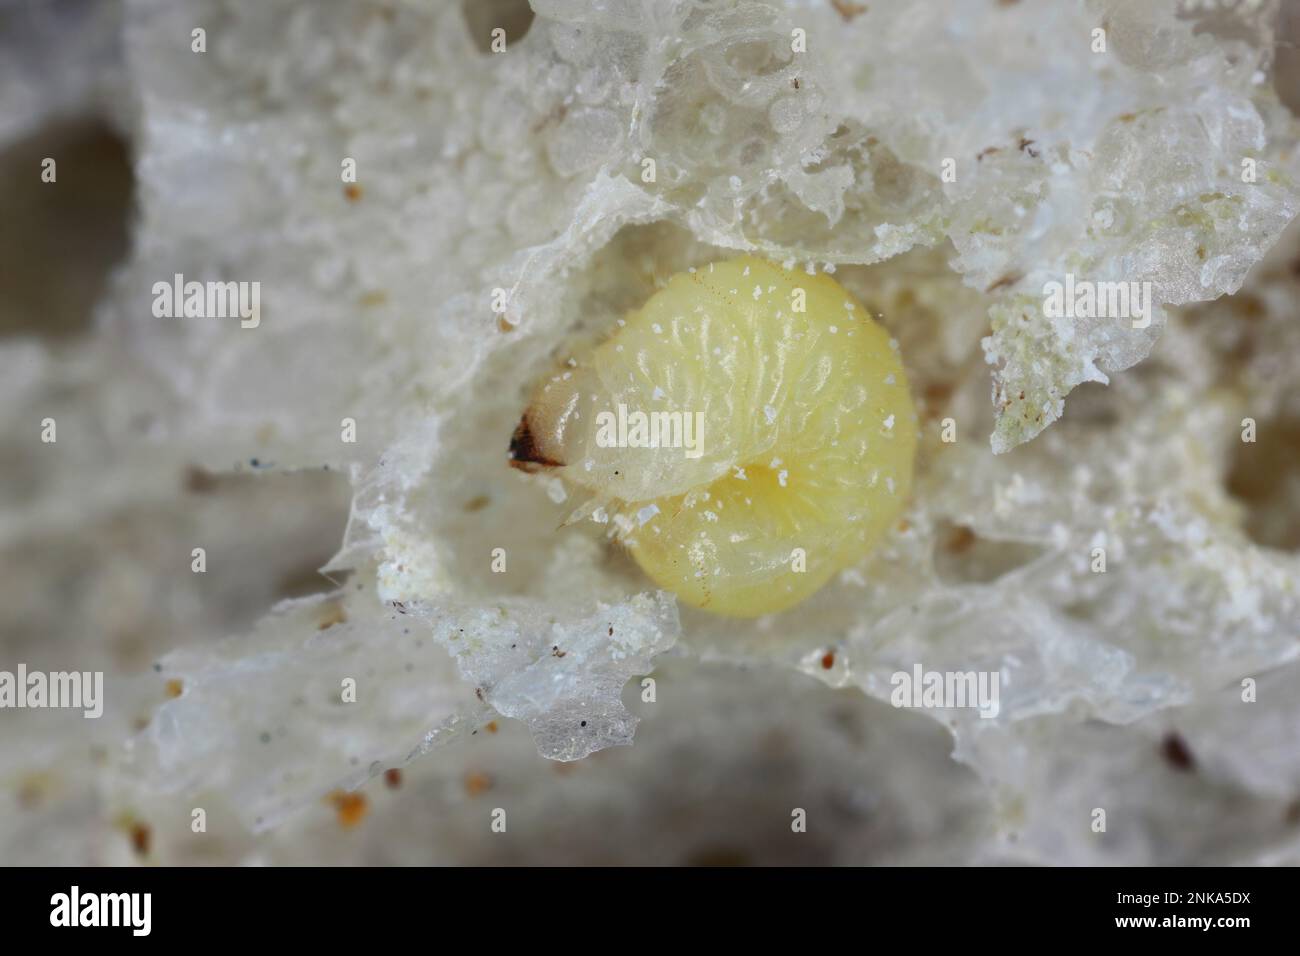 Biscuit, drugstore or bread beetle (Stegobium paniceum) larva stored product pest on bread debris. Stock Photo